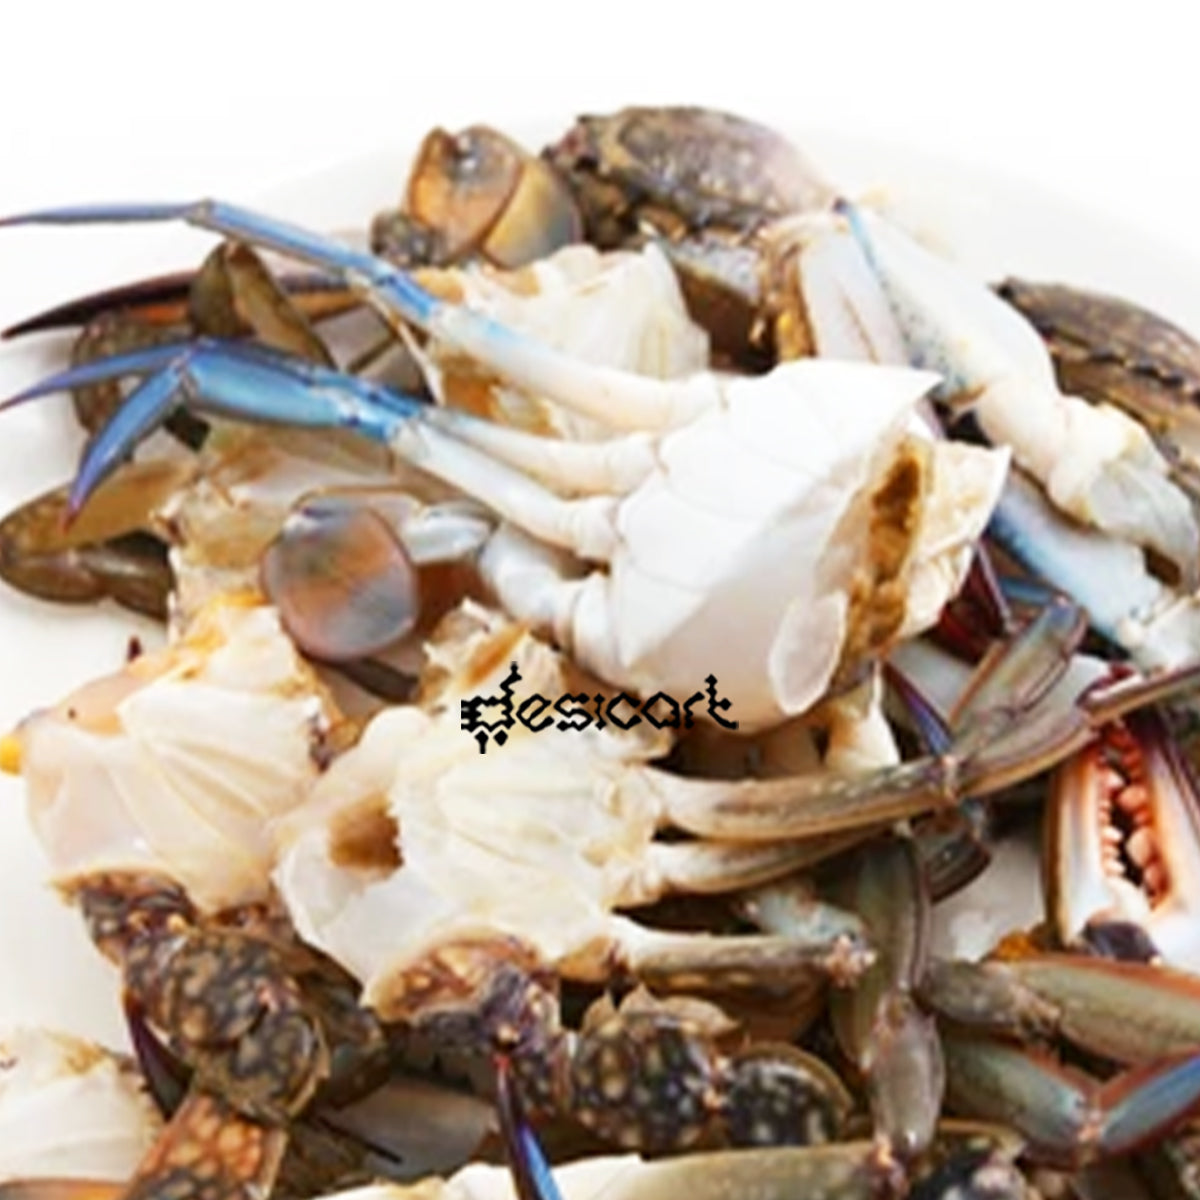 Diamond Cut Crab U/10 1kg